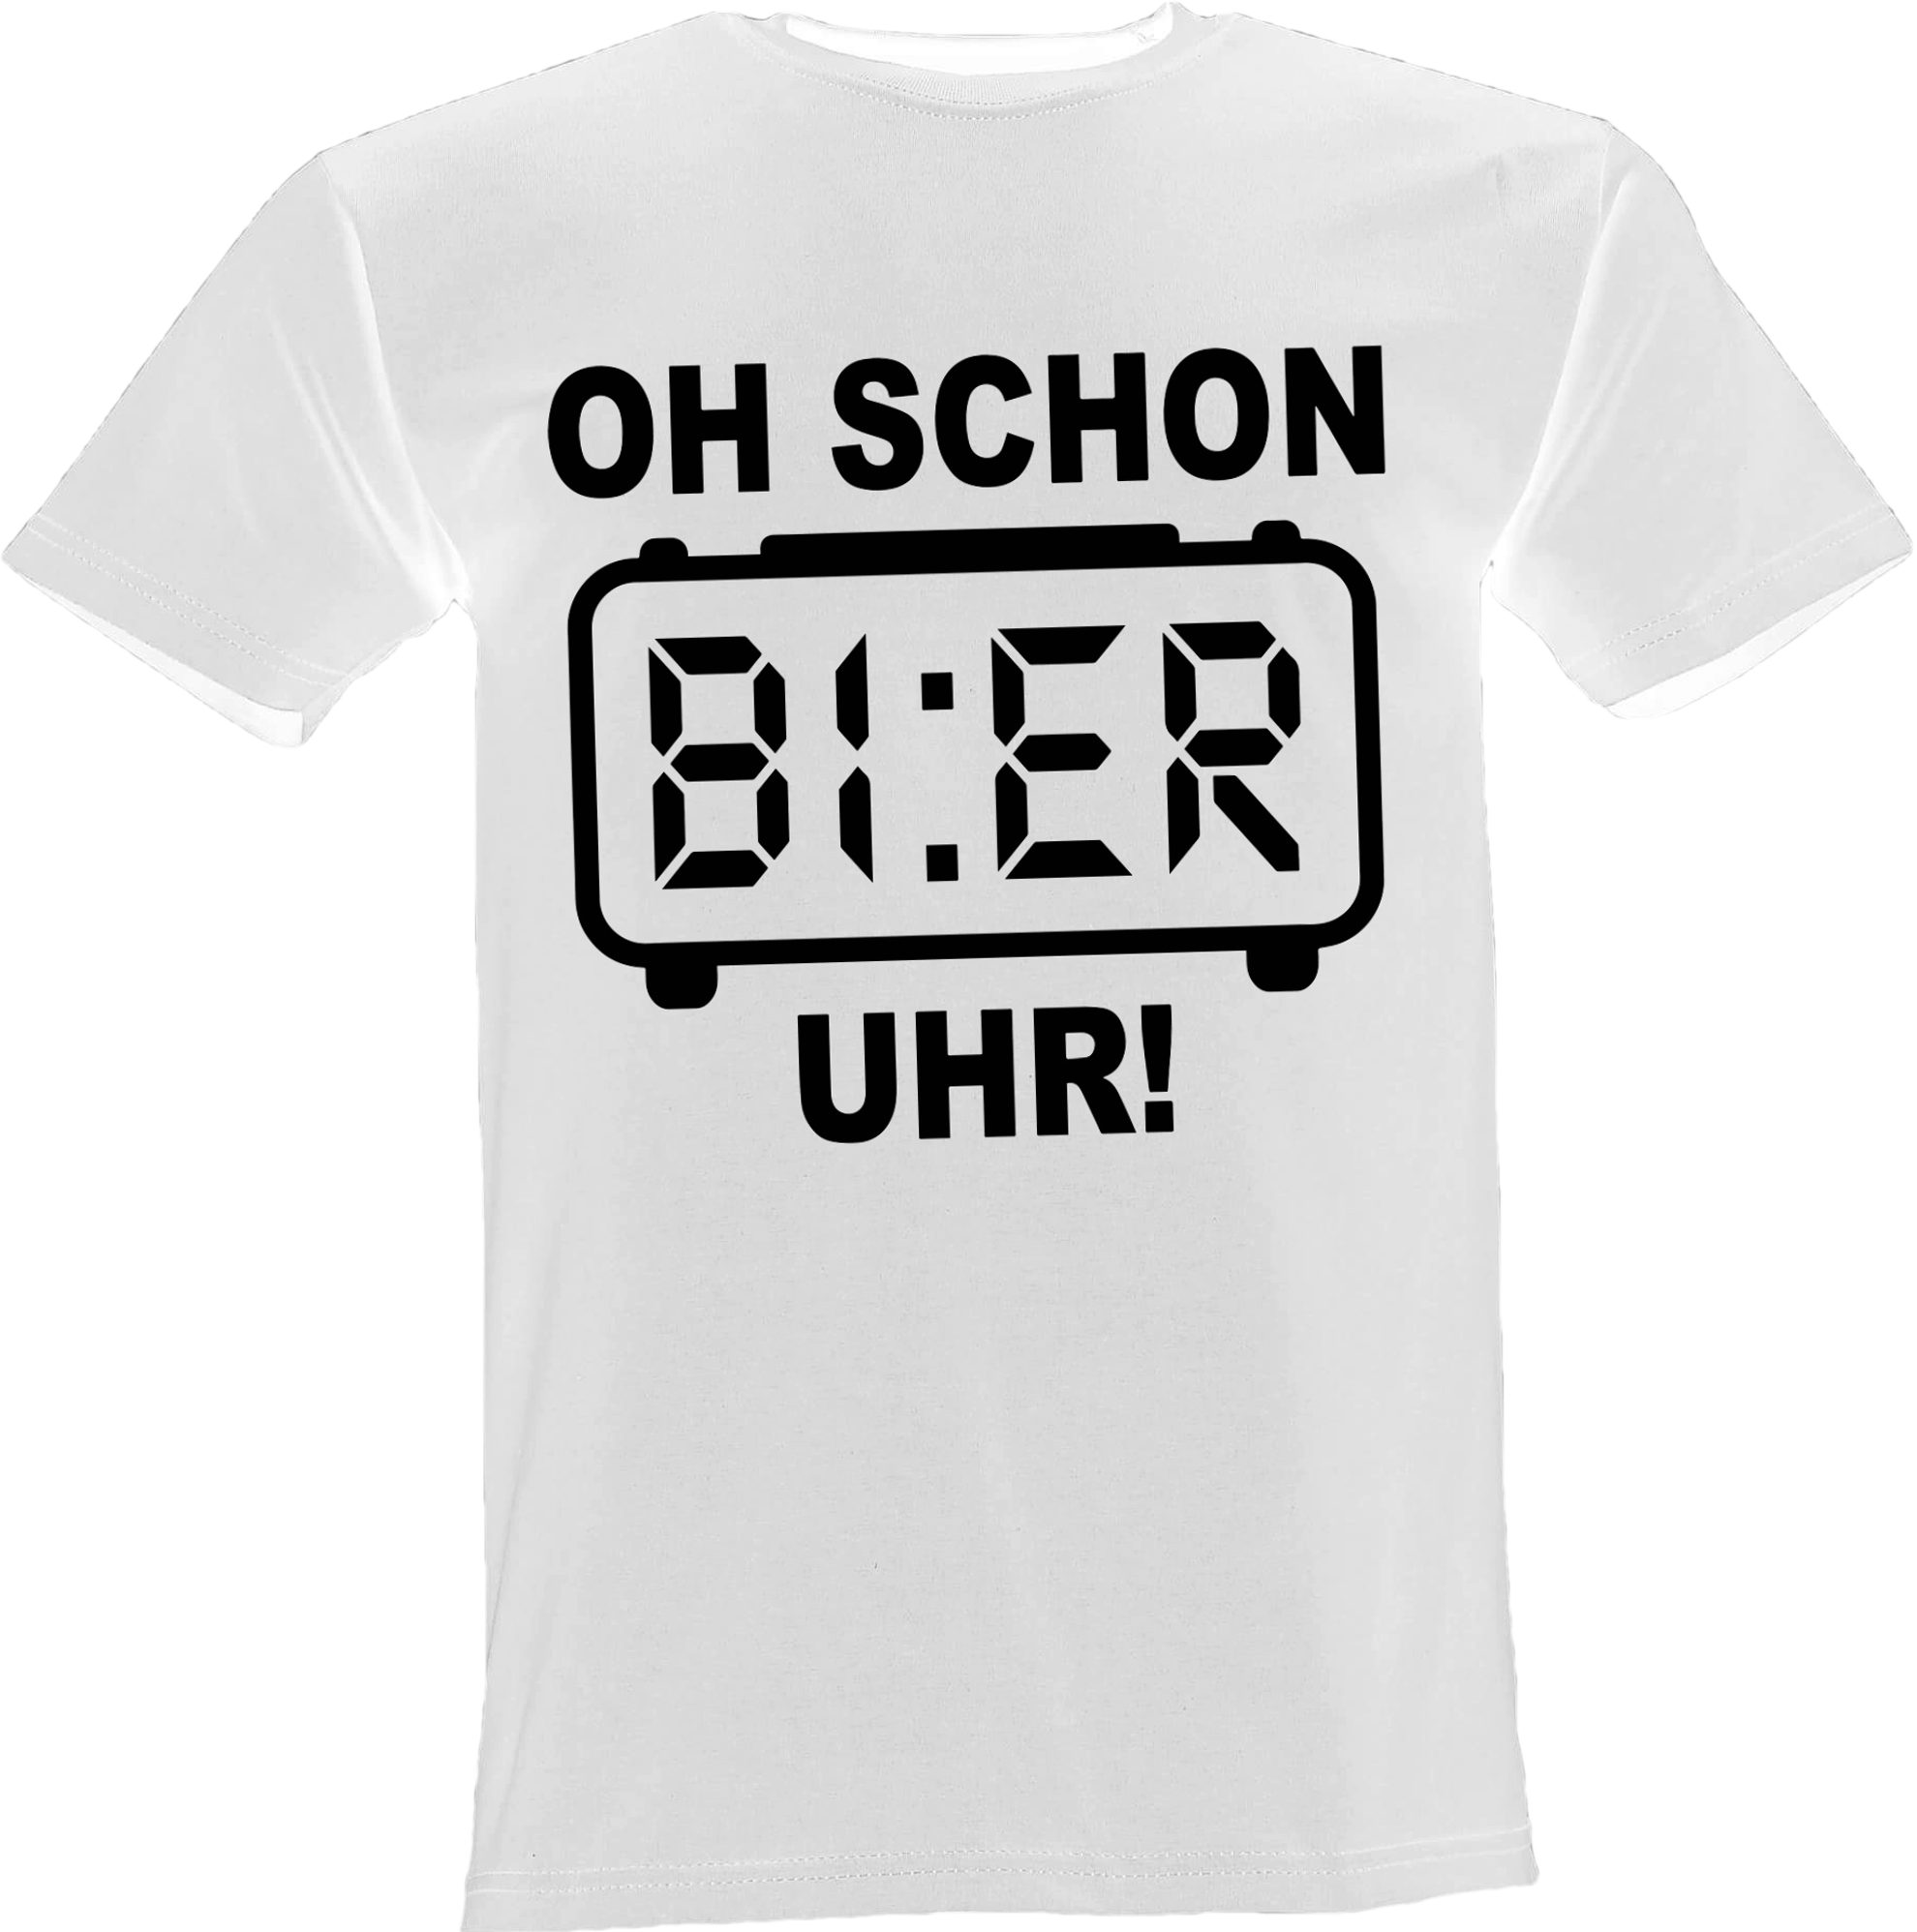 Lustige & Witzige T-Shirts T-Shirt T-Shirt Oh schon Bier Uhr Fun-Shirt Logo  3, Logo, Aufdruck, T-Shirt, Fun Shirt